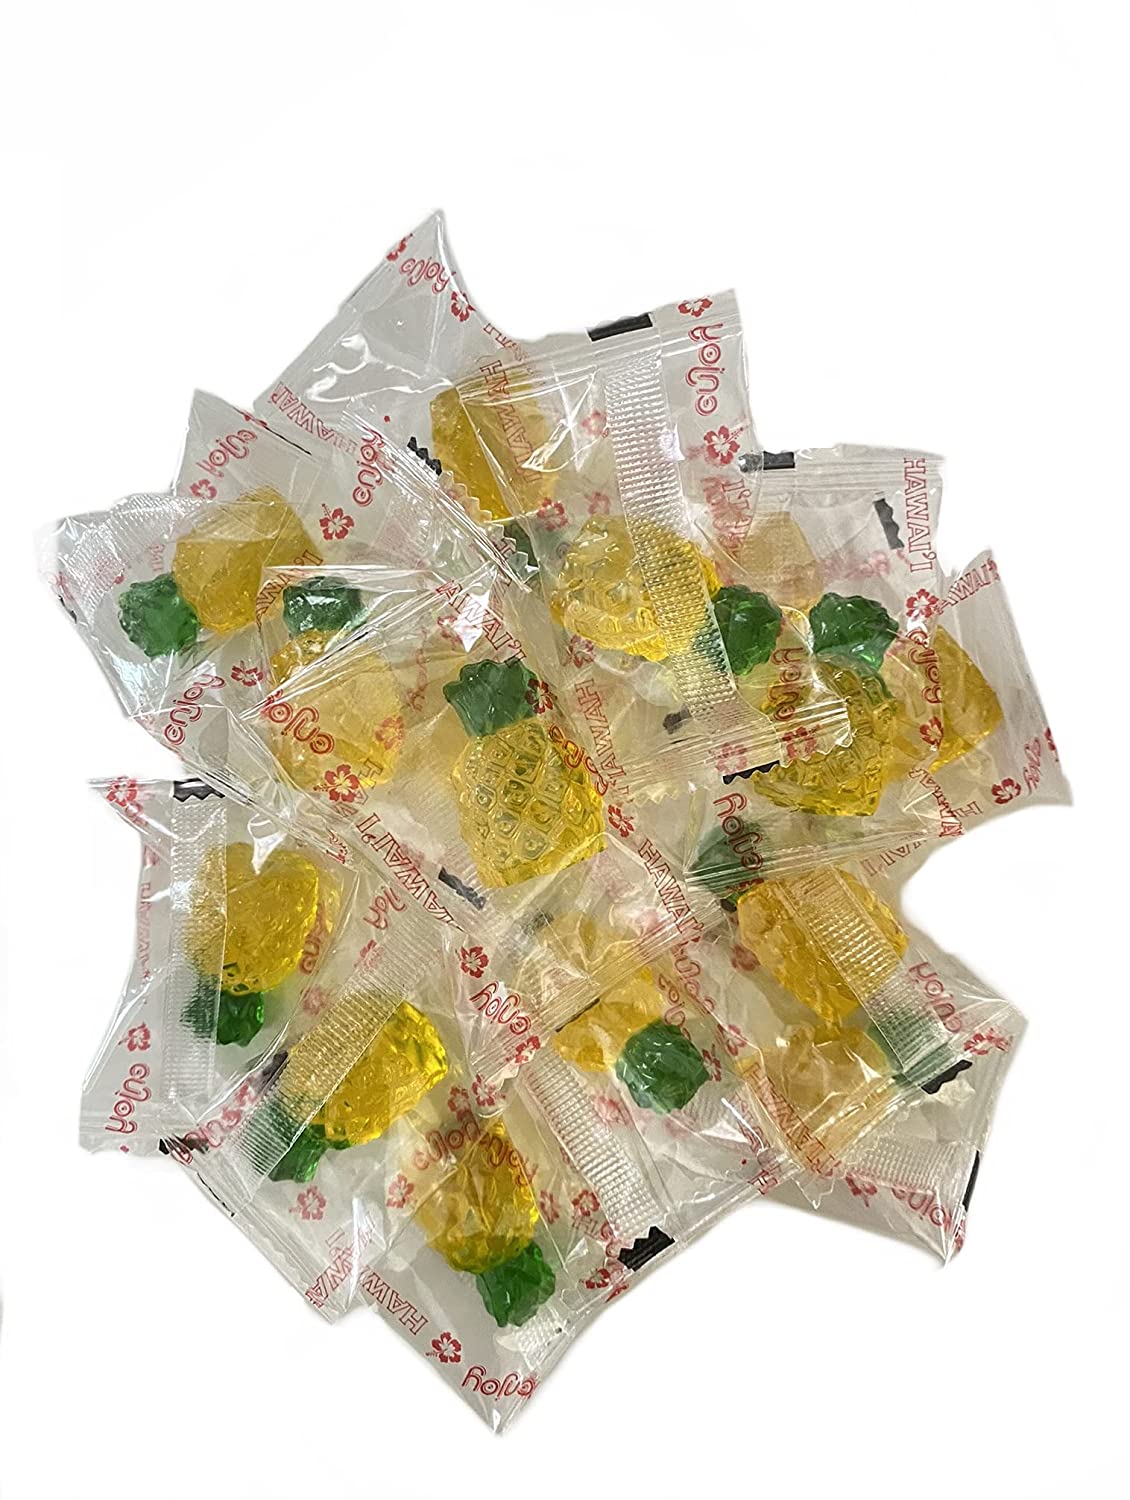 3D Gummy Pineapple Large 28.2 ounce bag